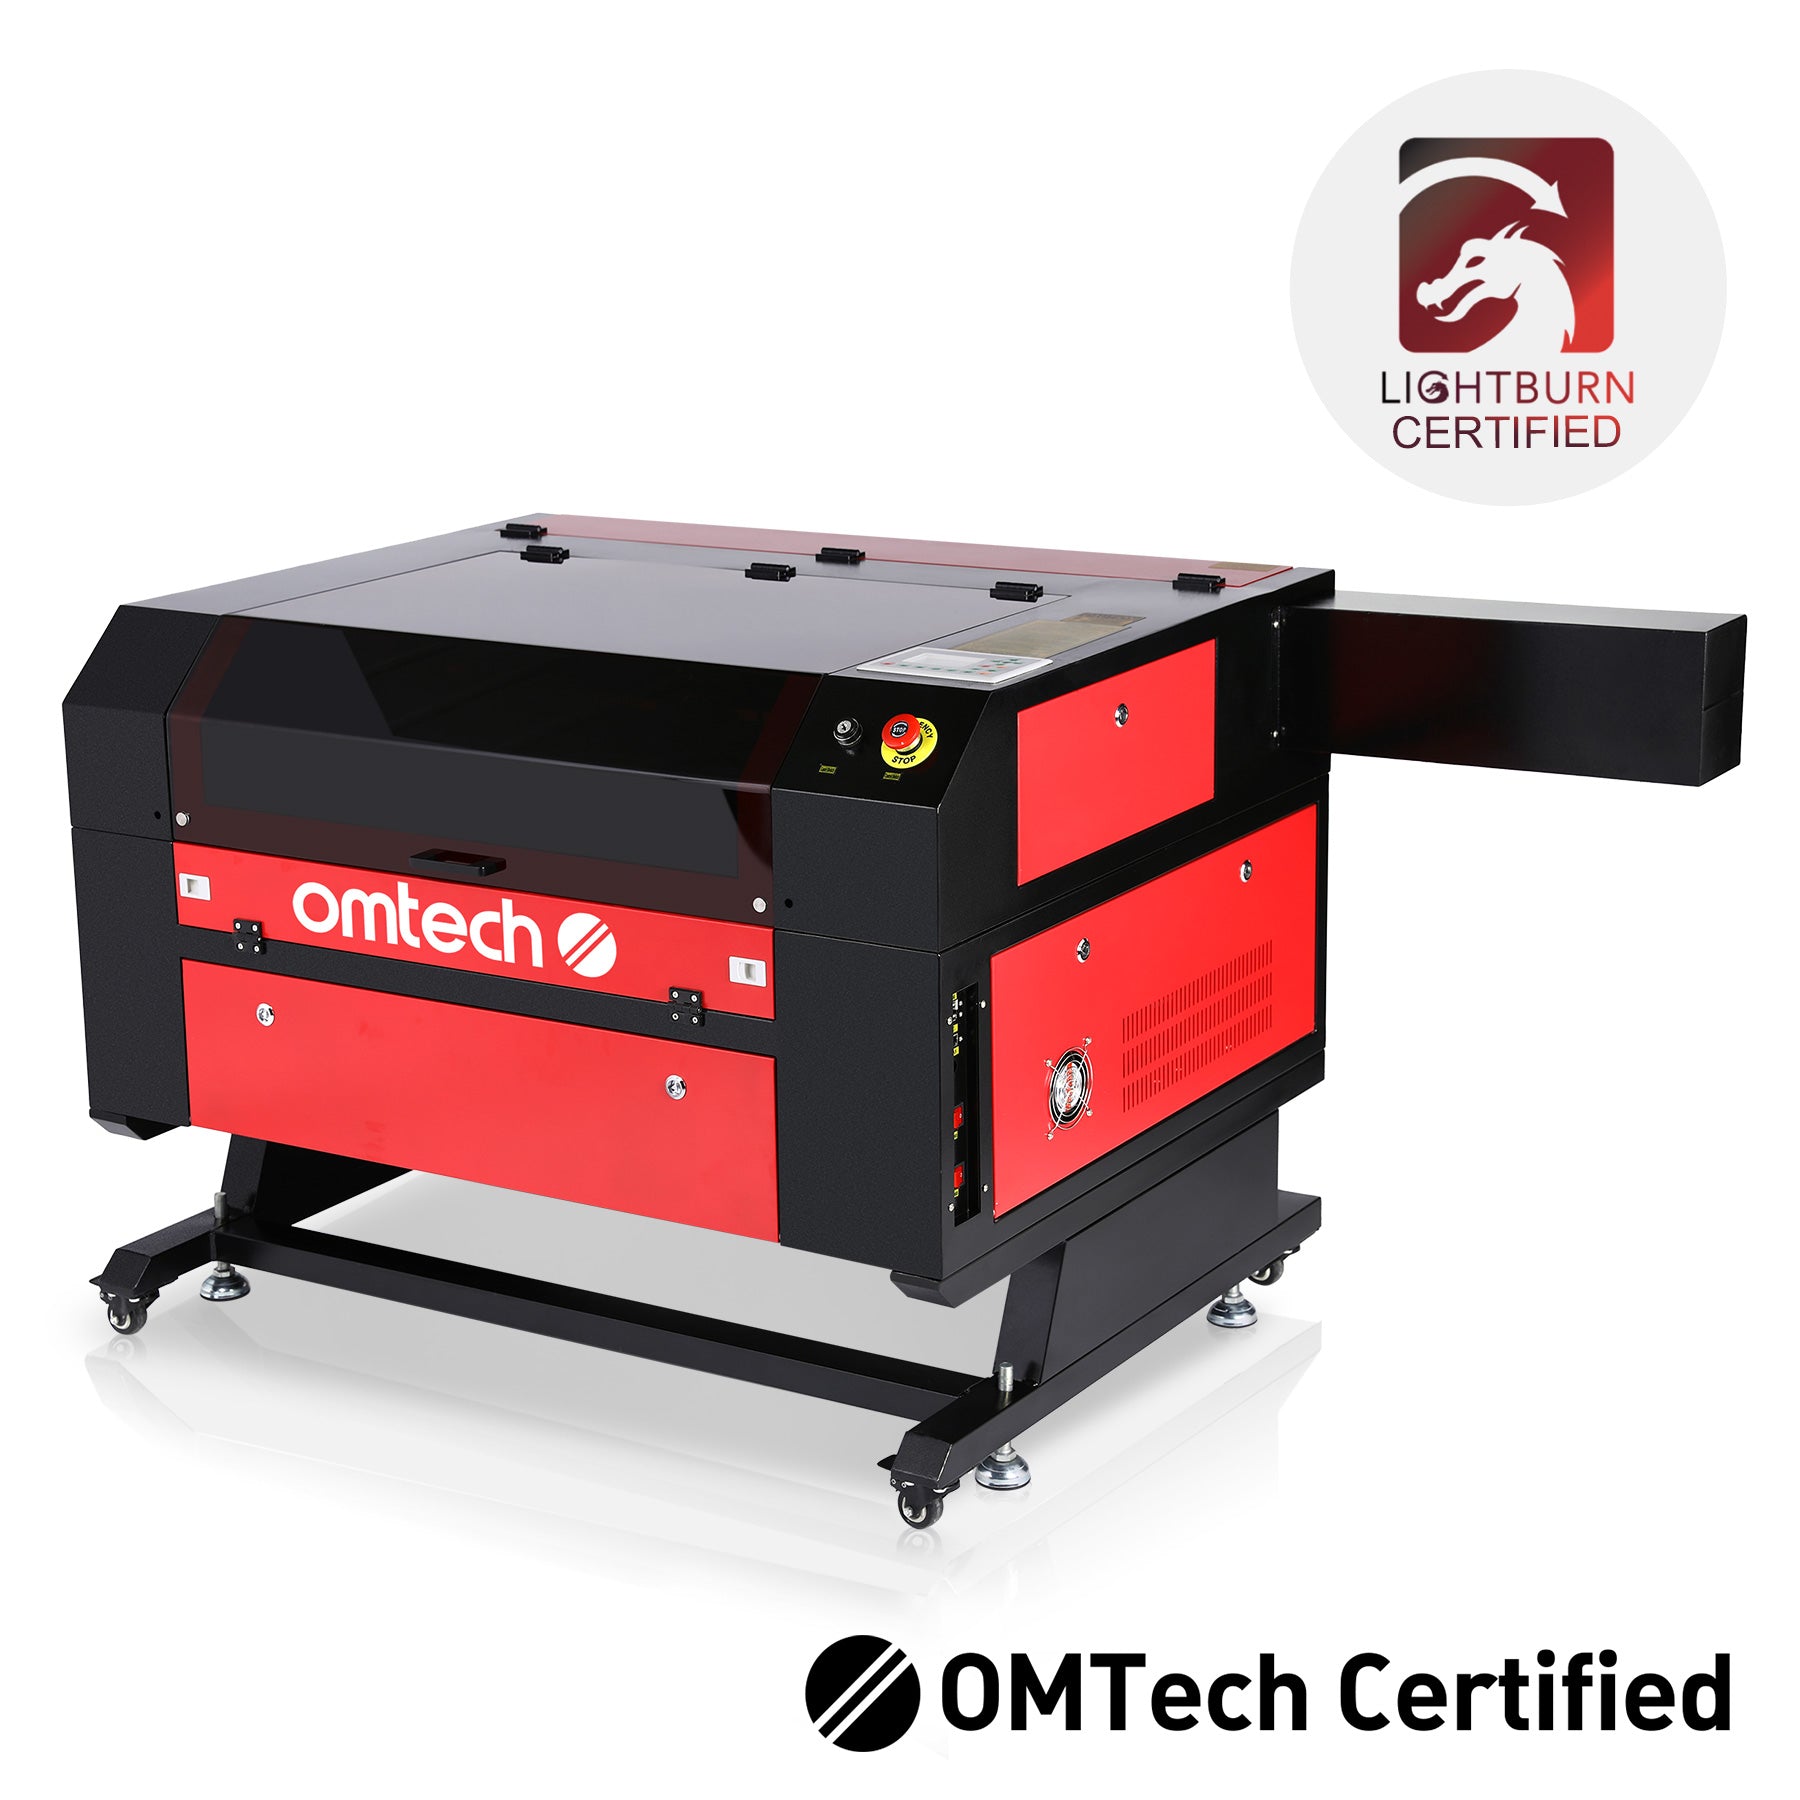 Omtech 100w CO2 Laser Lightburn Cut Library All the Settings